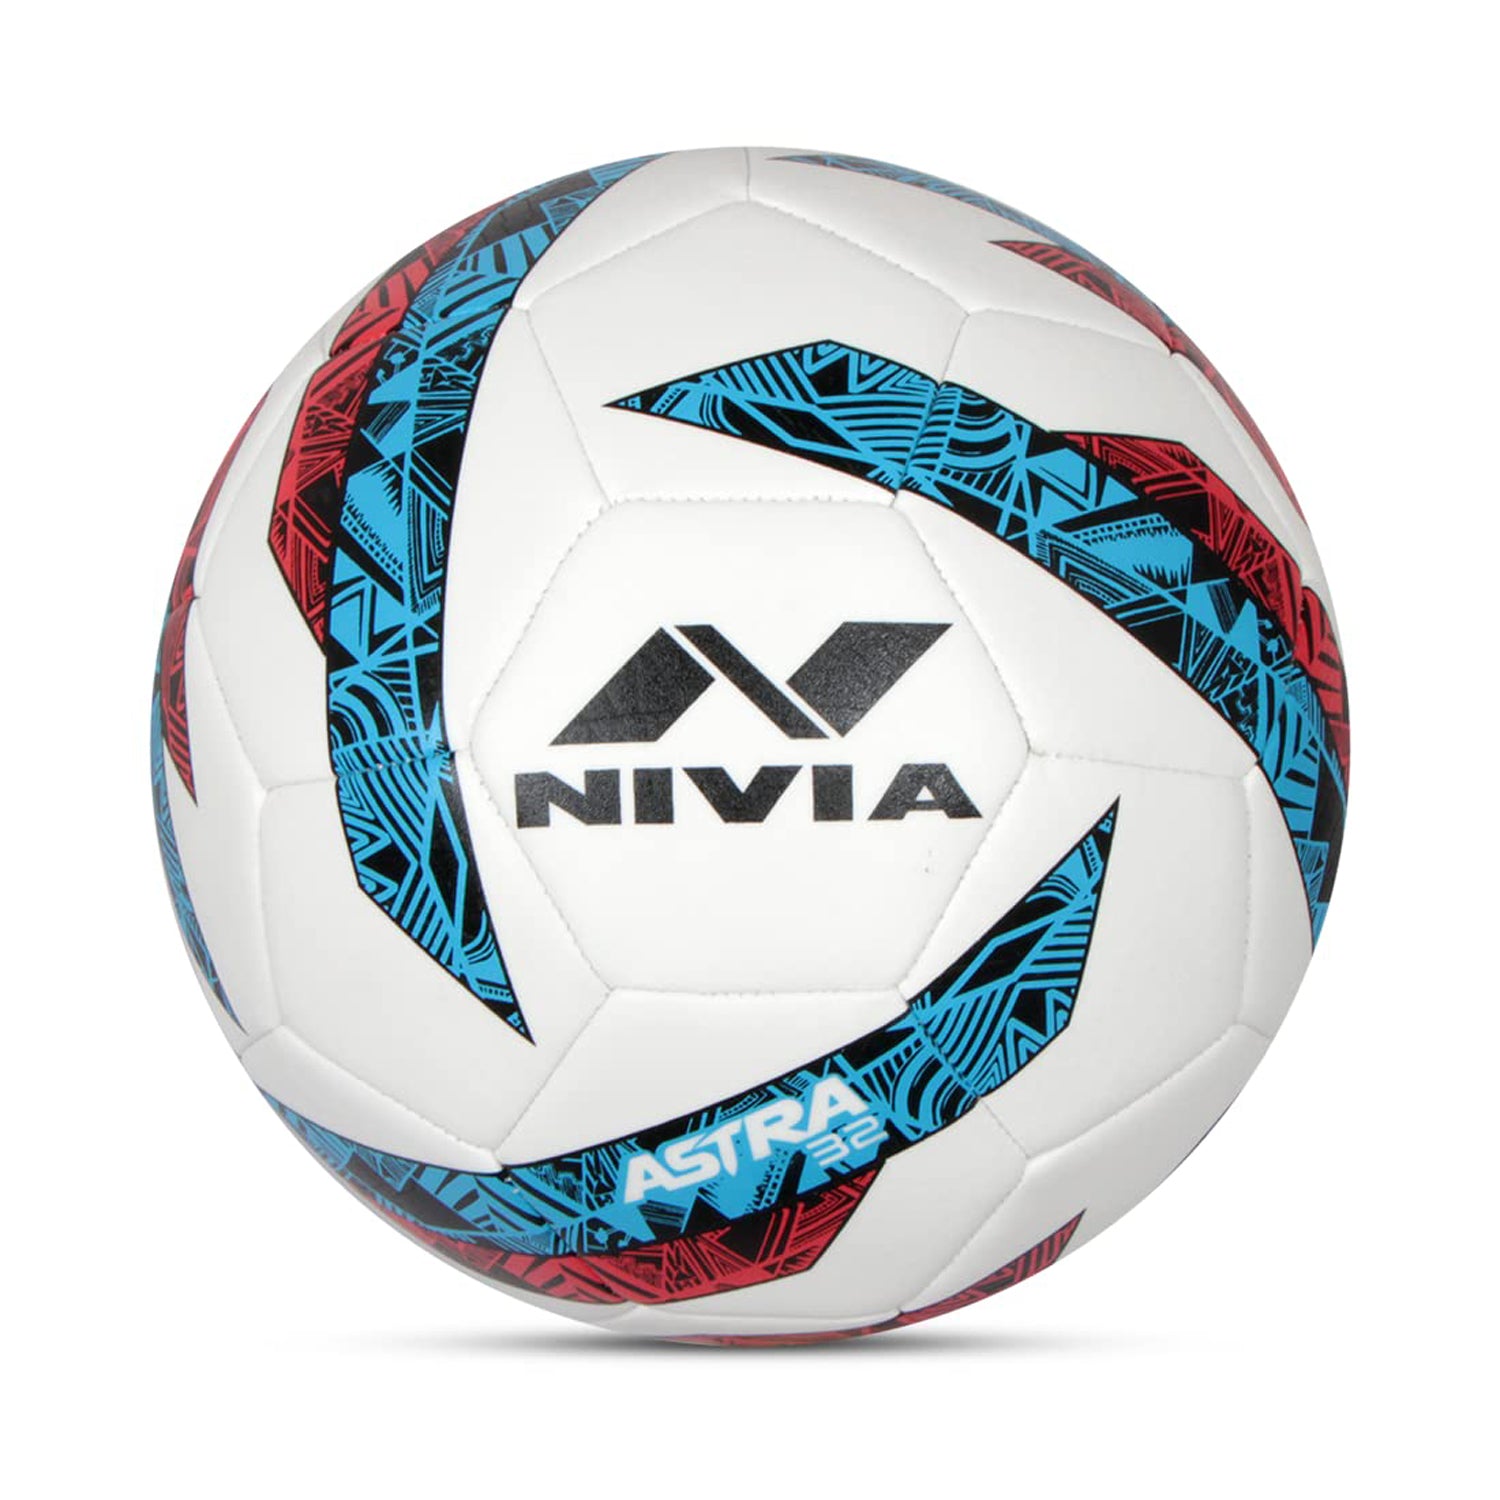 Nivia Astra 32 TPU Football, White - Size 5 - Best Price online Prokicksports.com